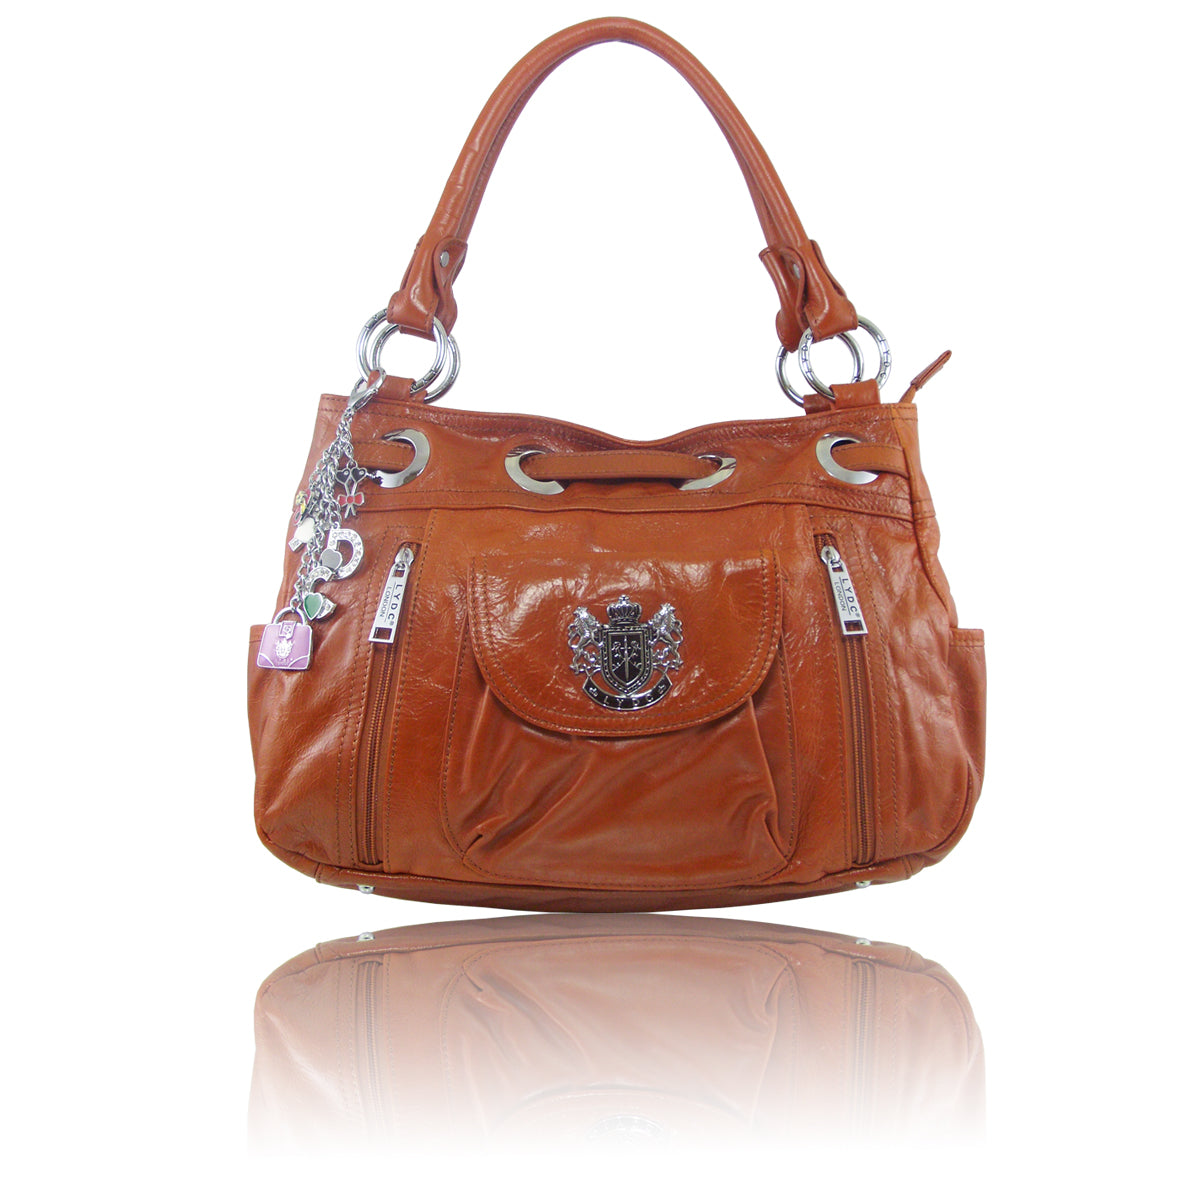 LYDC Real Leather Luxurious Handbag